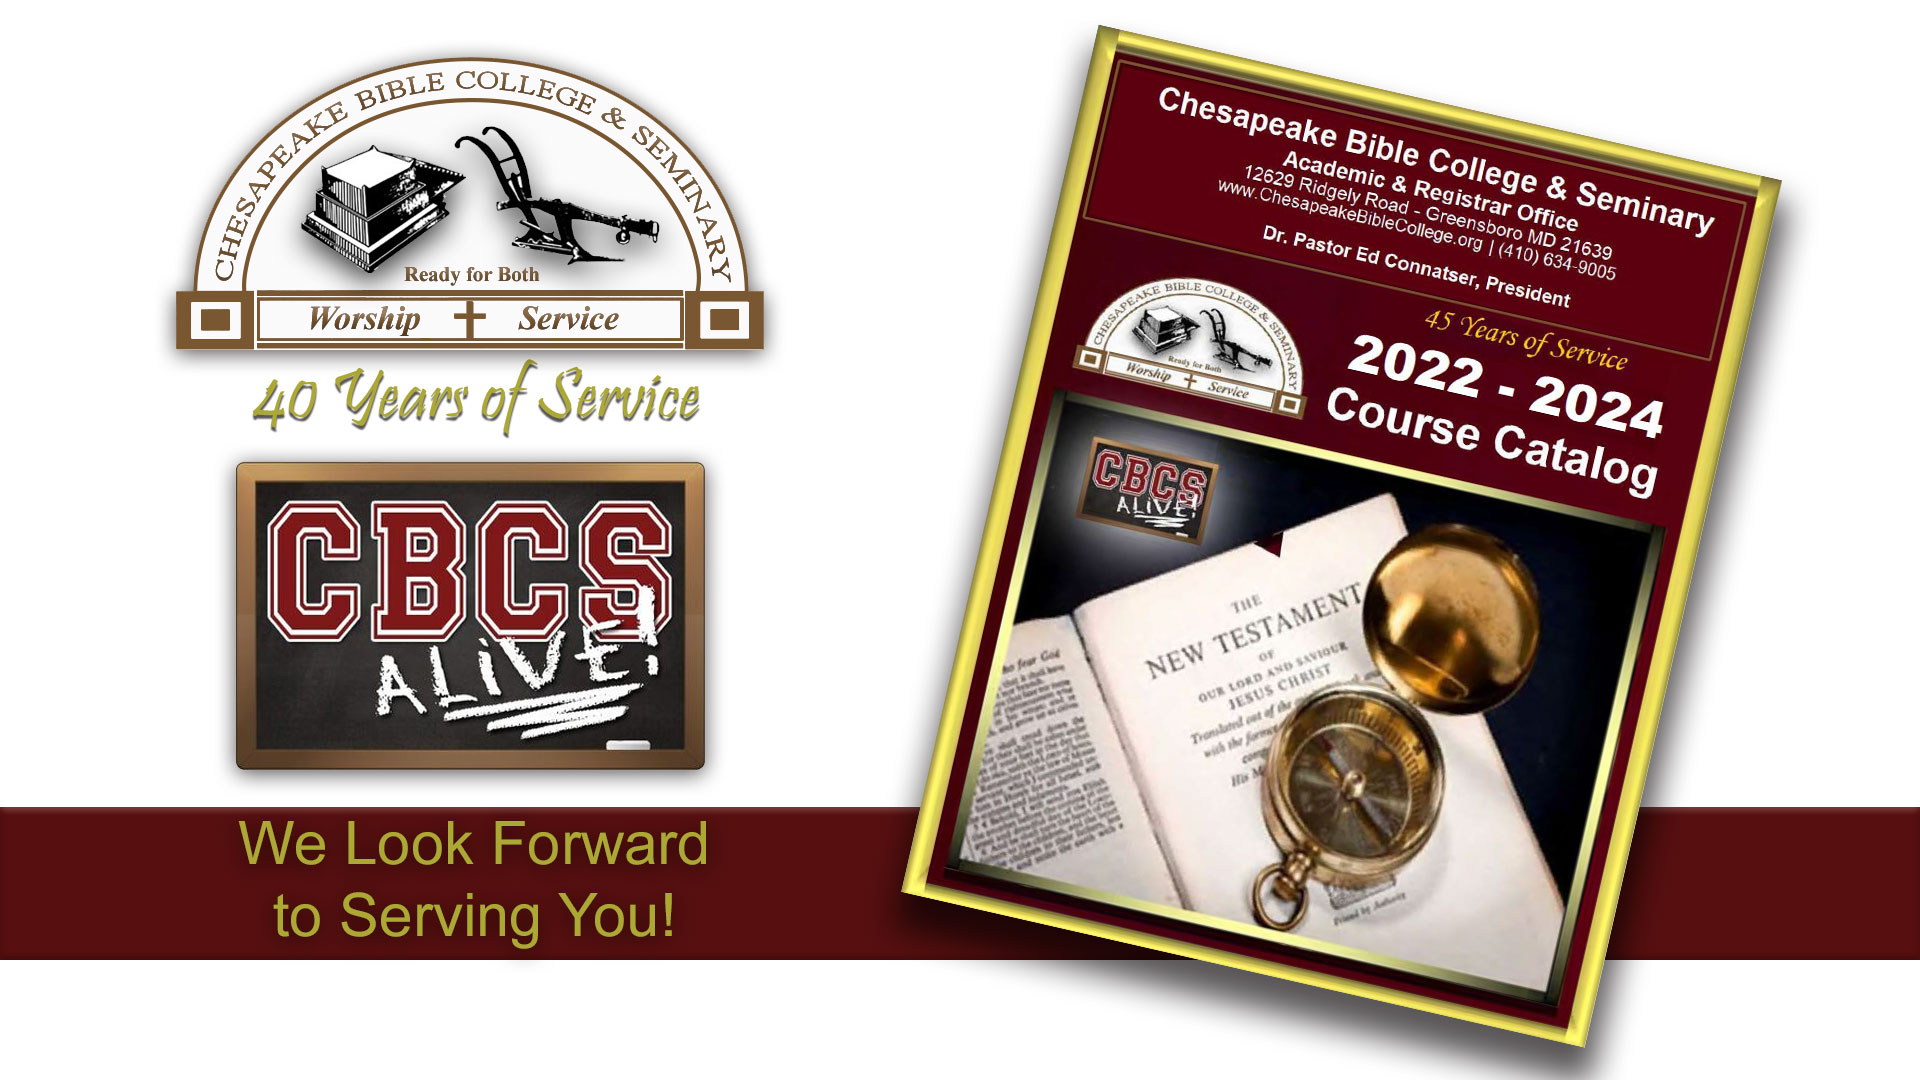 Chesapeake Bible College & Seminary Course Catalog